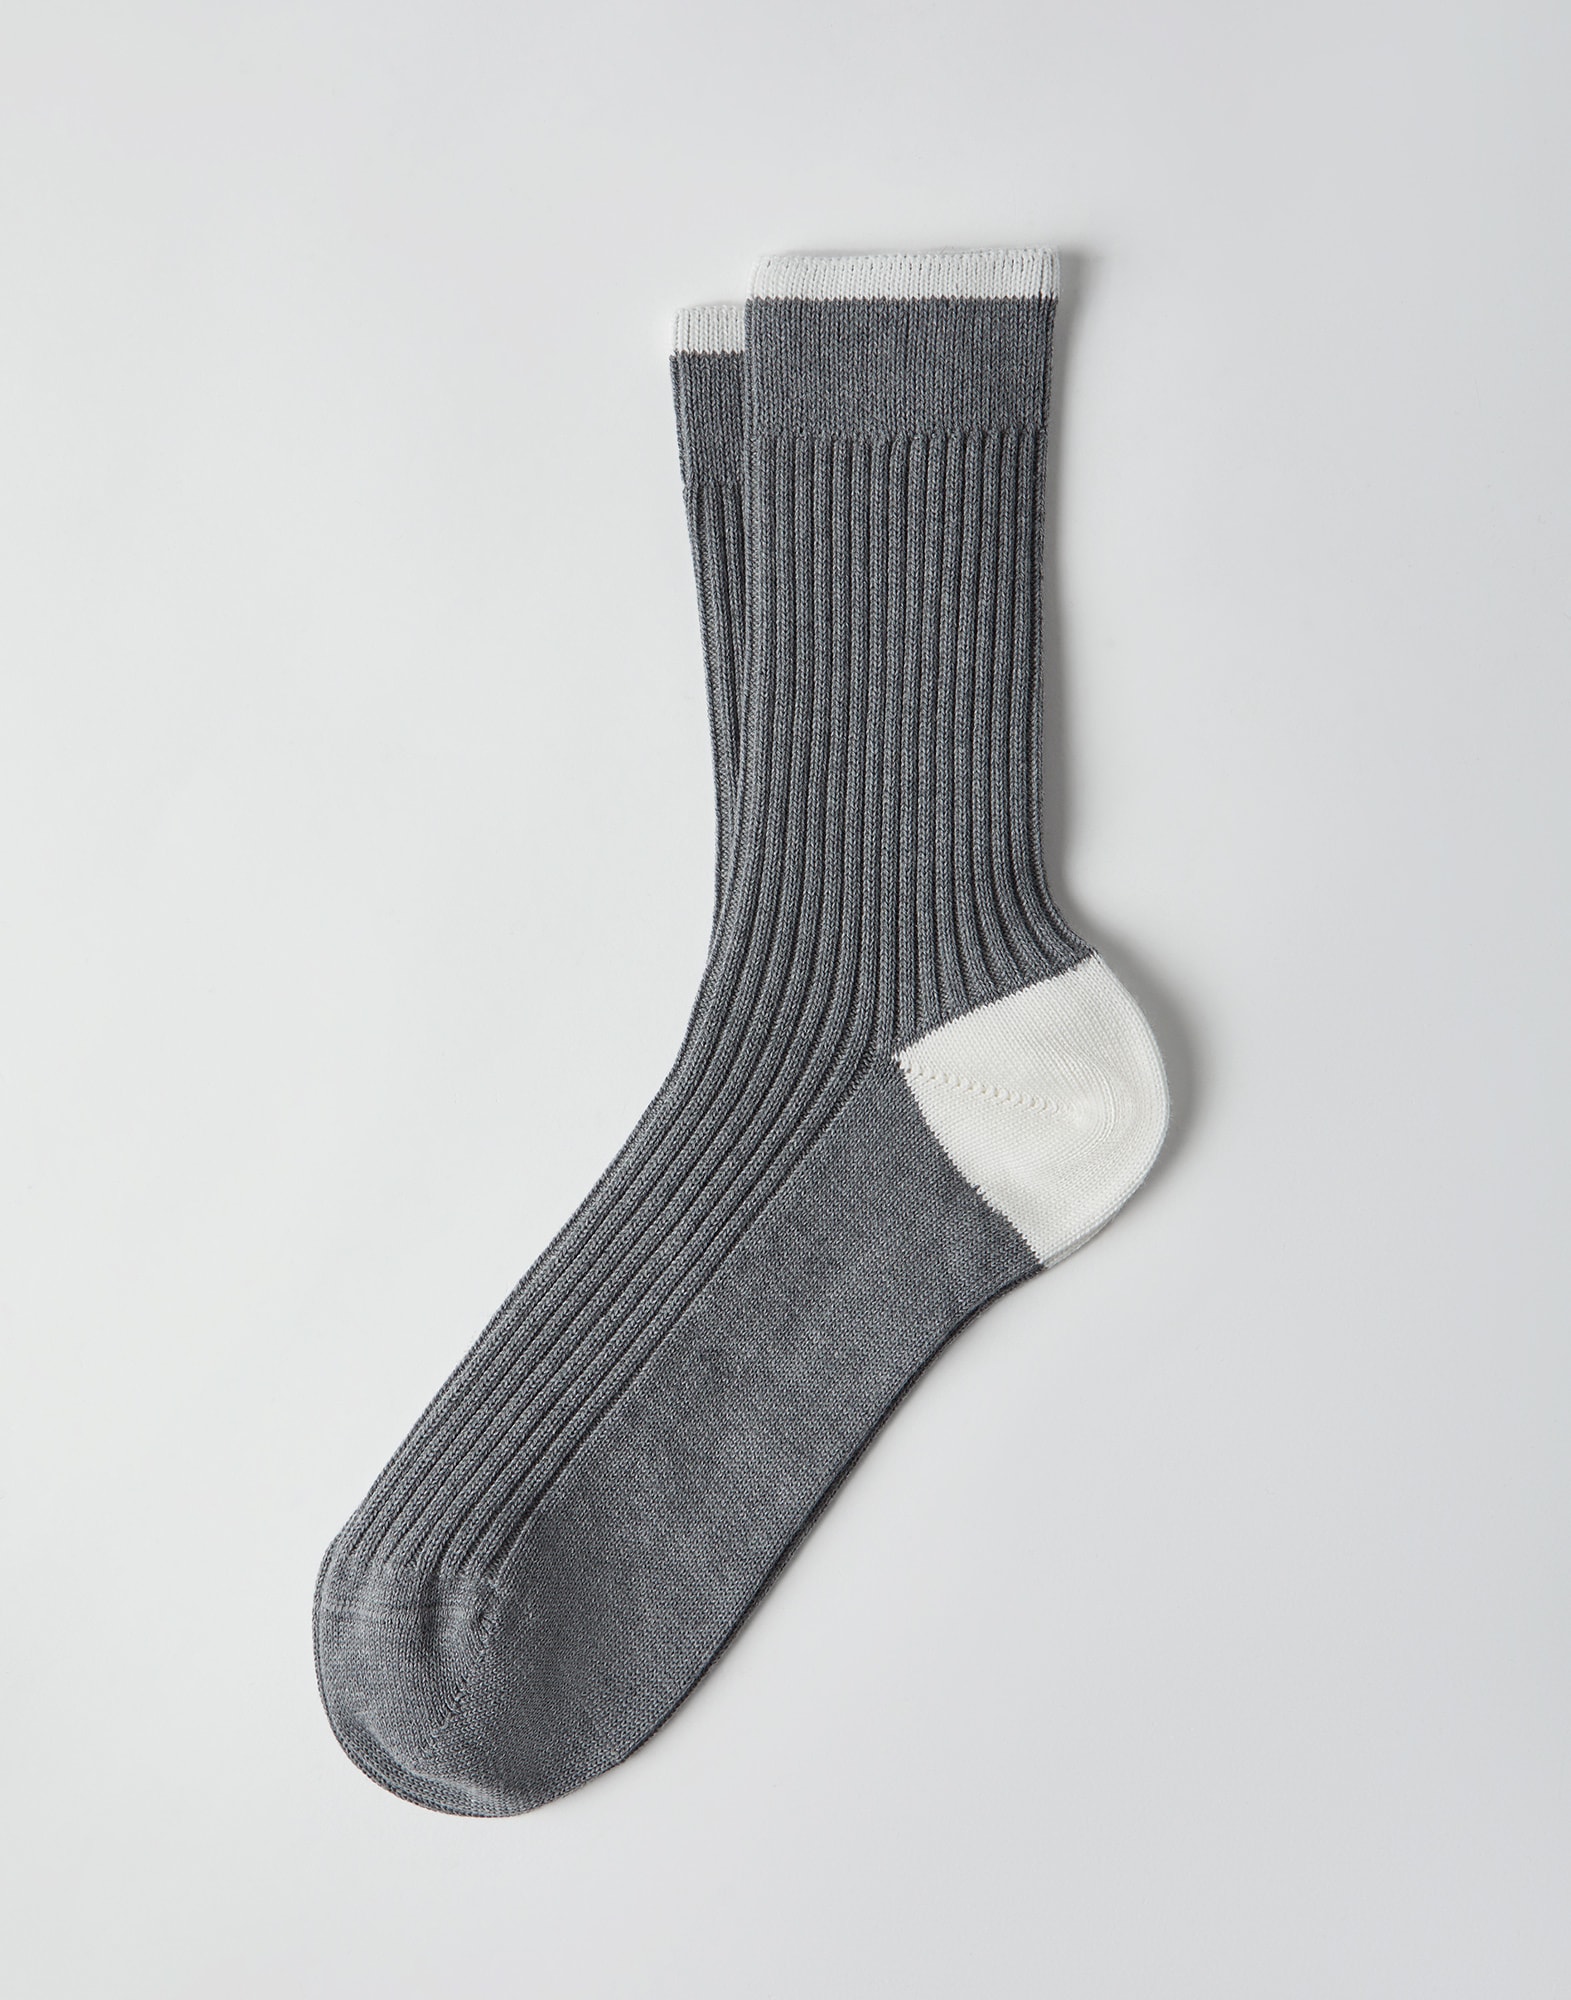 Cotton socks